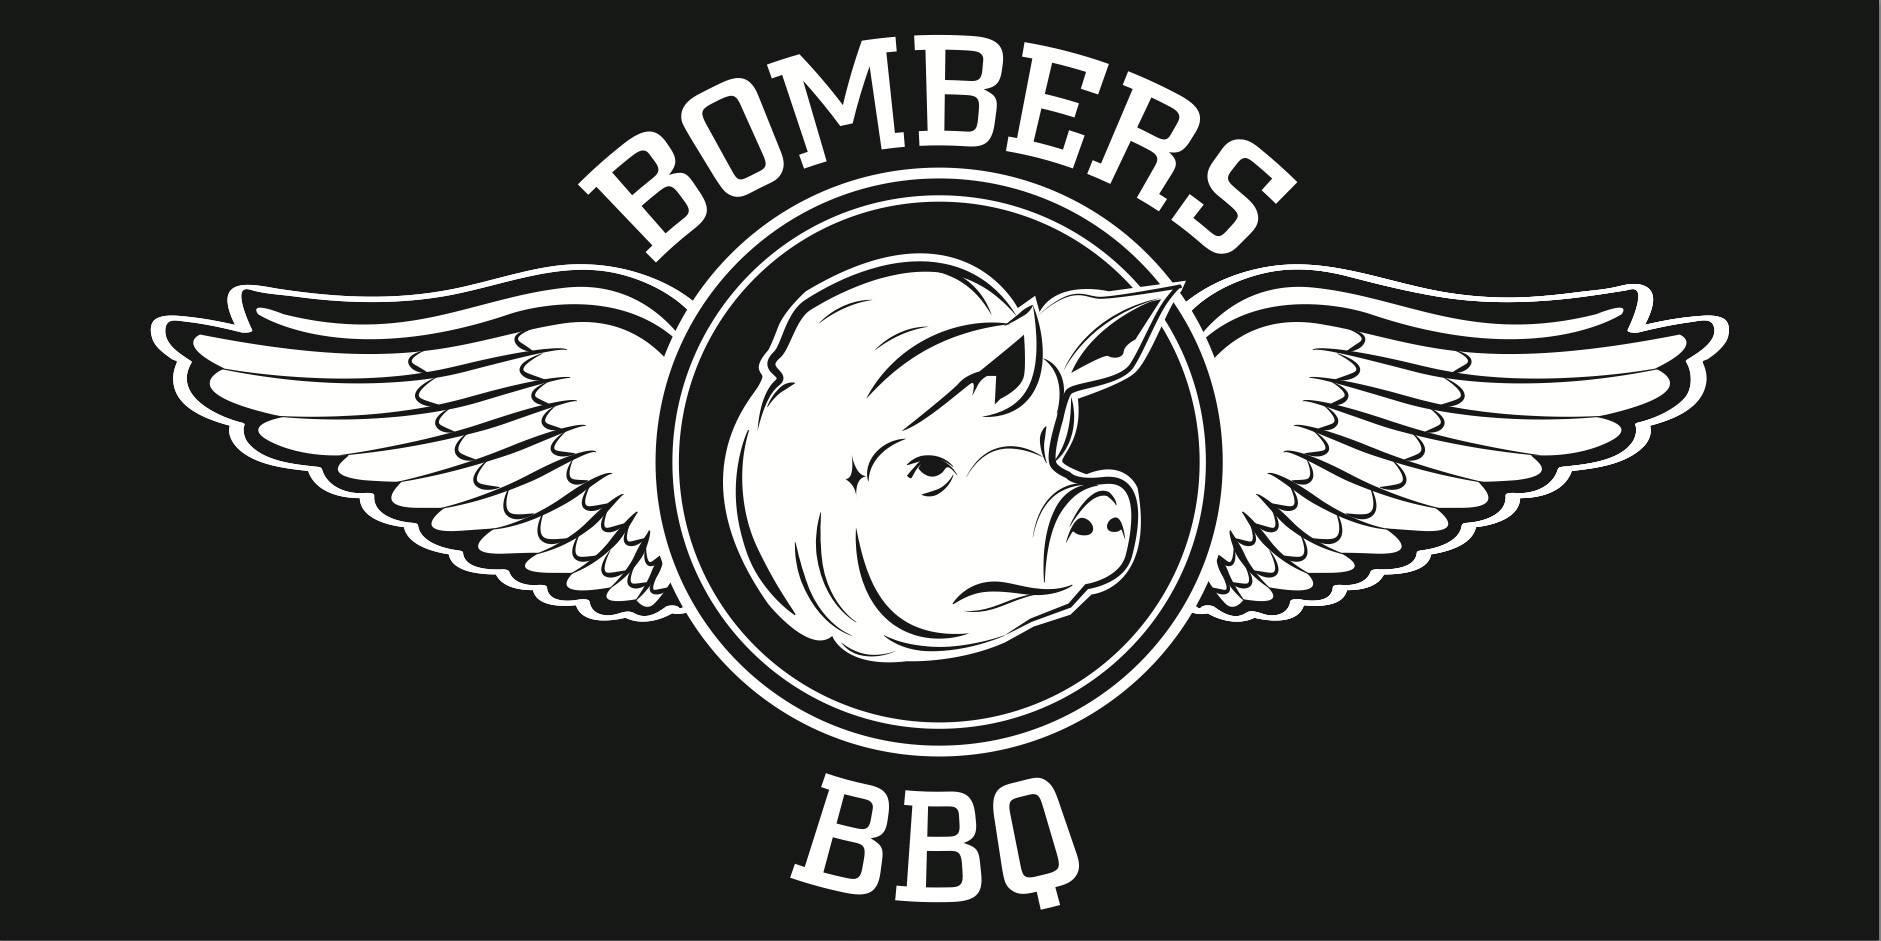 Bombers BBQ